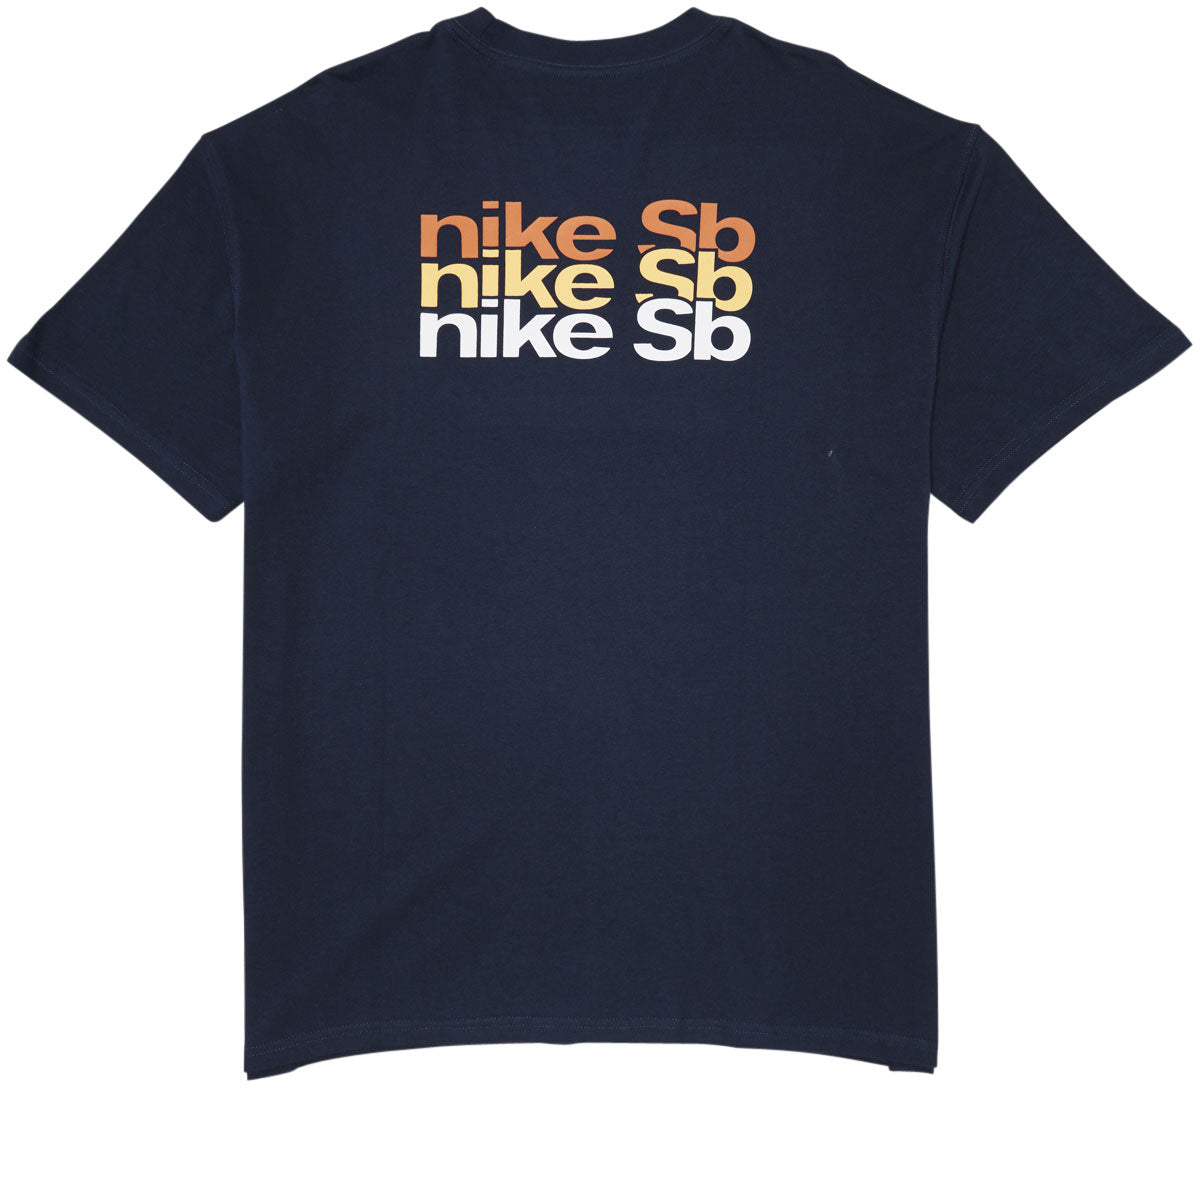 Nike SB Anchored T-Shirt - Midnight Navy image 1